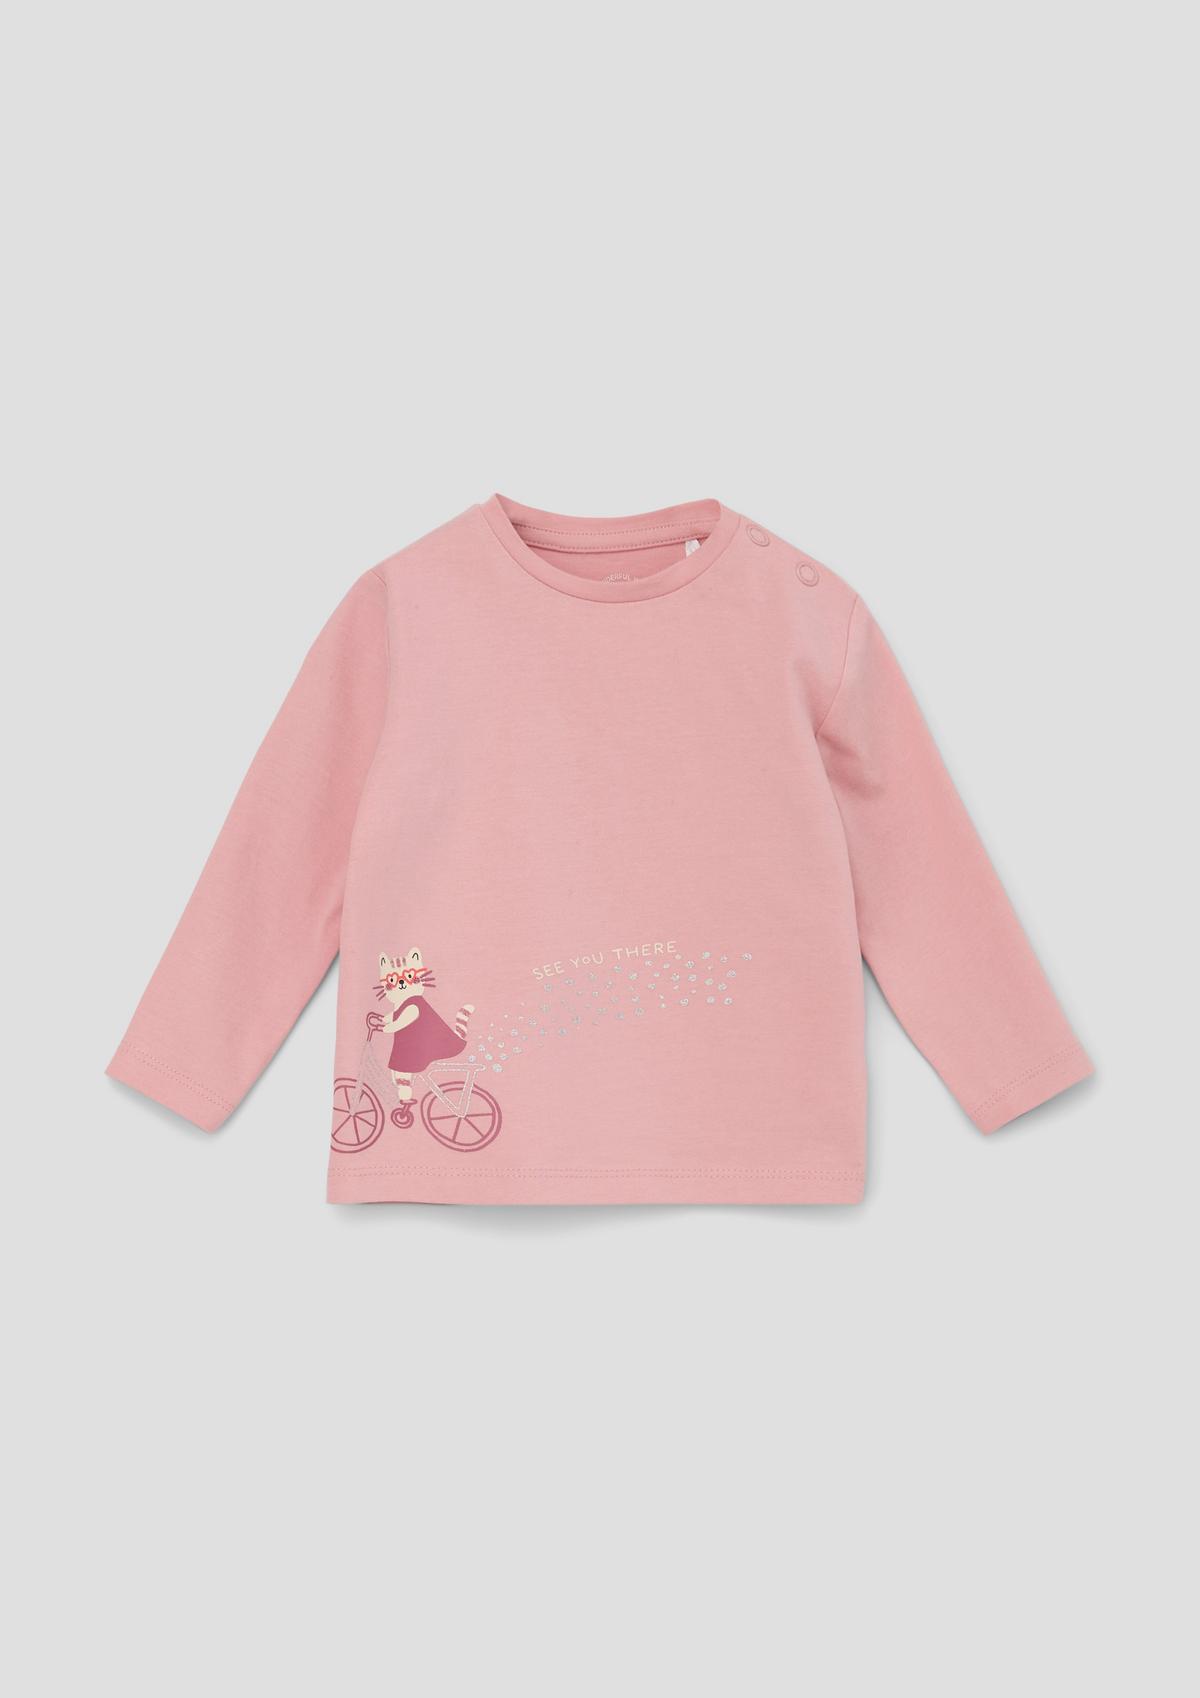 Shop baby tops for online girls